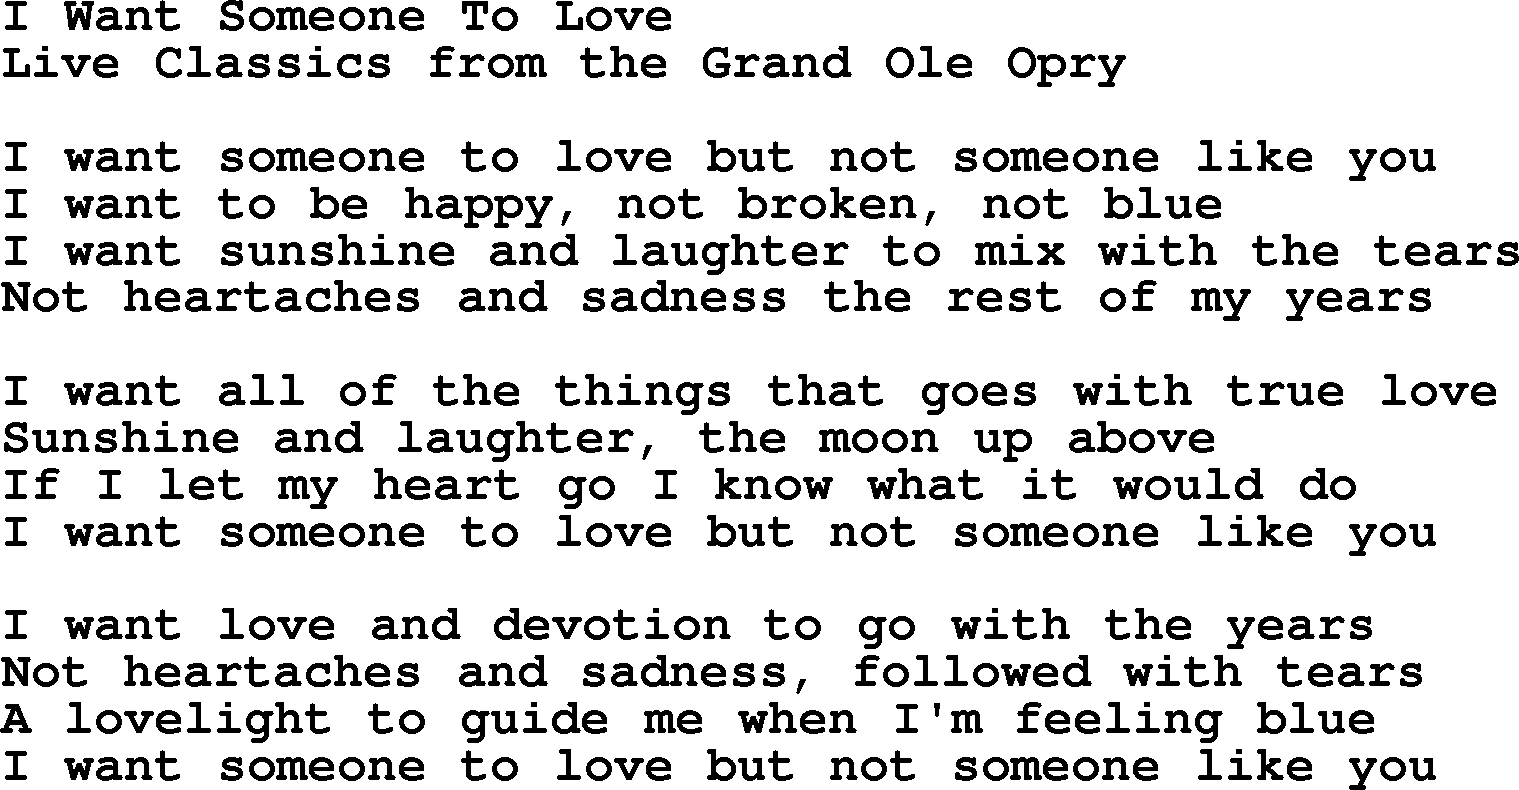 Marty Robbins song: I Want Someone To Love, lyrics